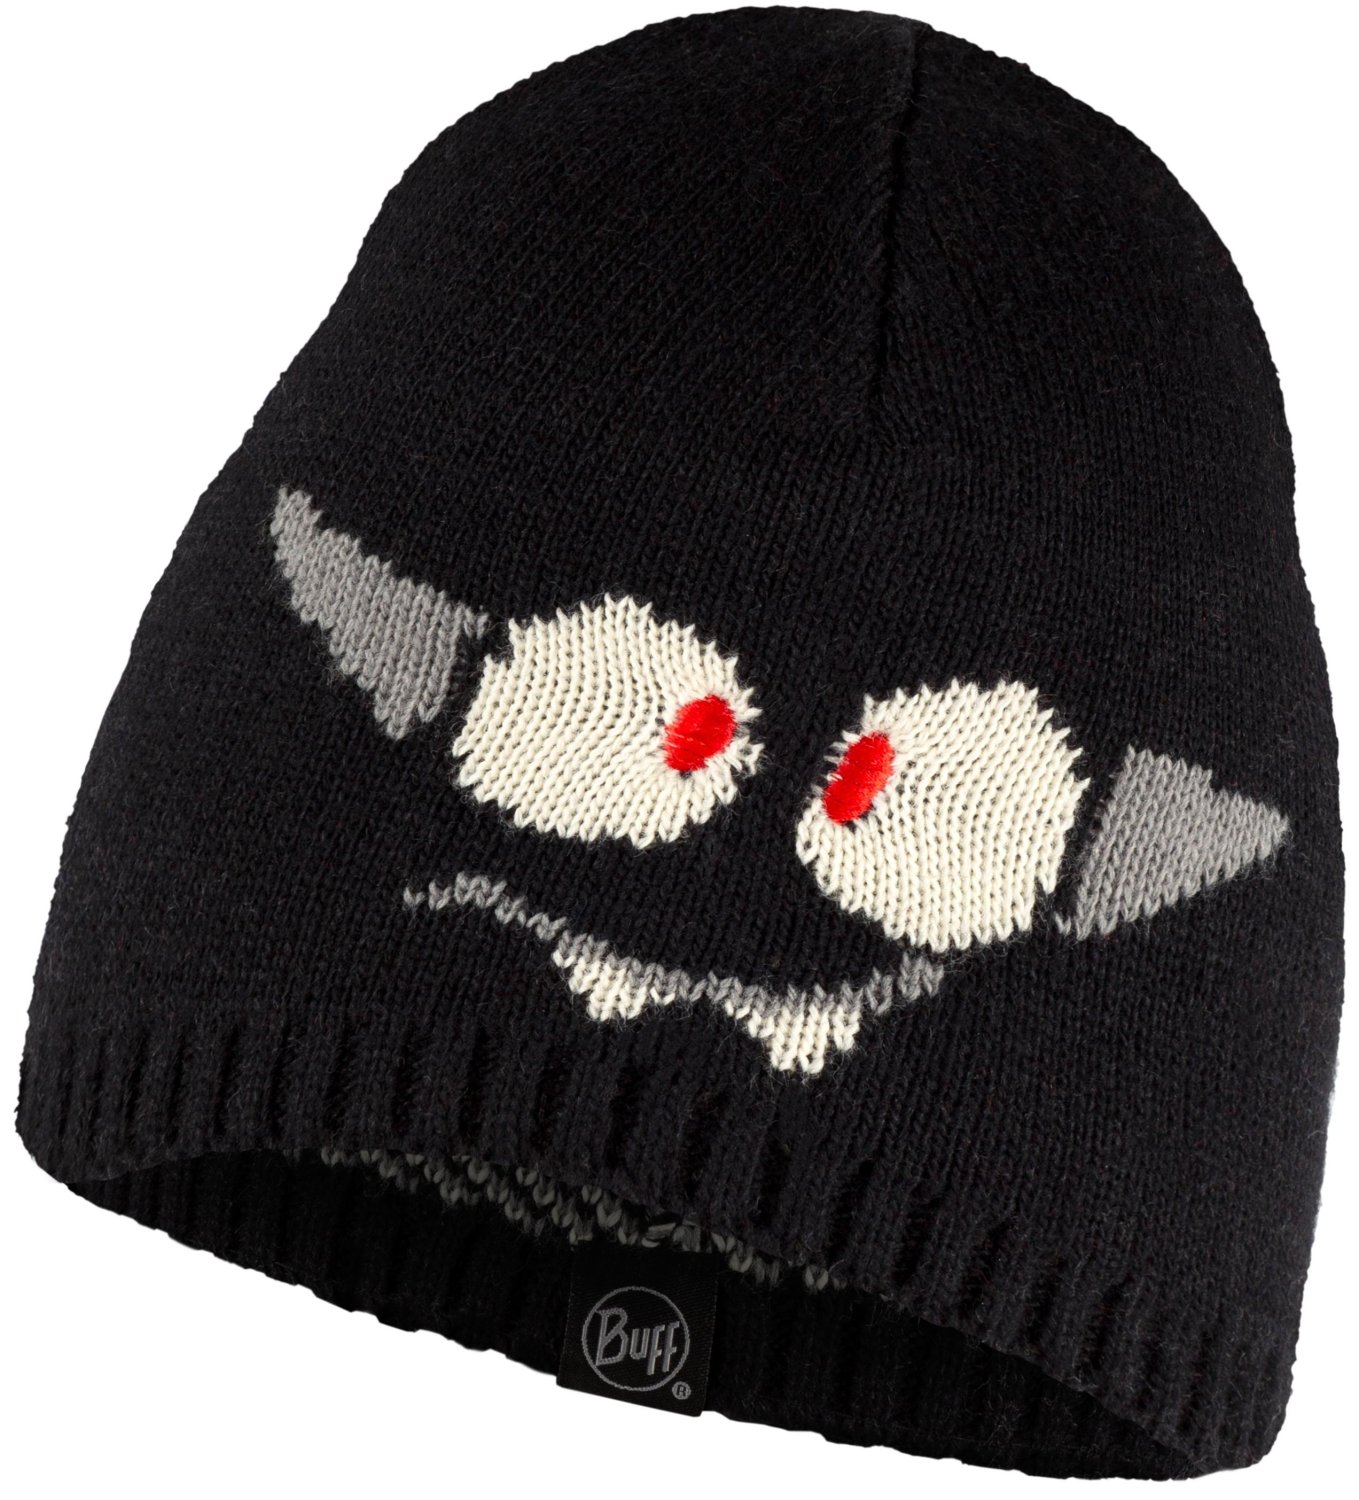 Шапка Buff Knitted Hat Bonky Baffy Black US:one size, 129626.999.10.00, цвет черная